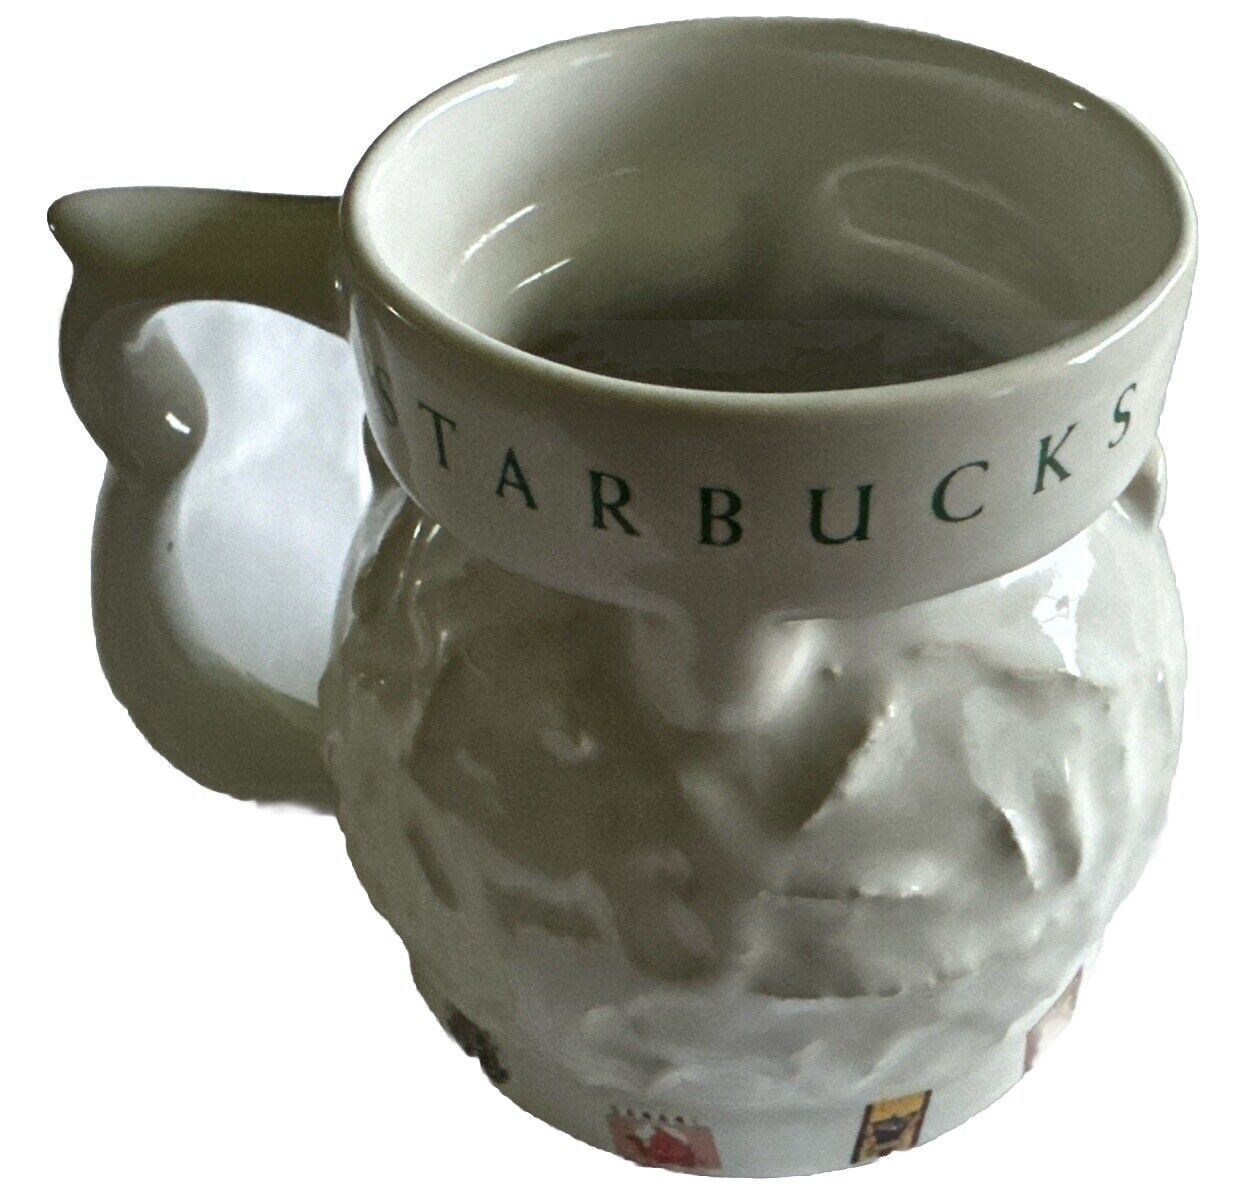 Vintage Starbucks Global Coffee Mug EUC Round Cup With Texture